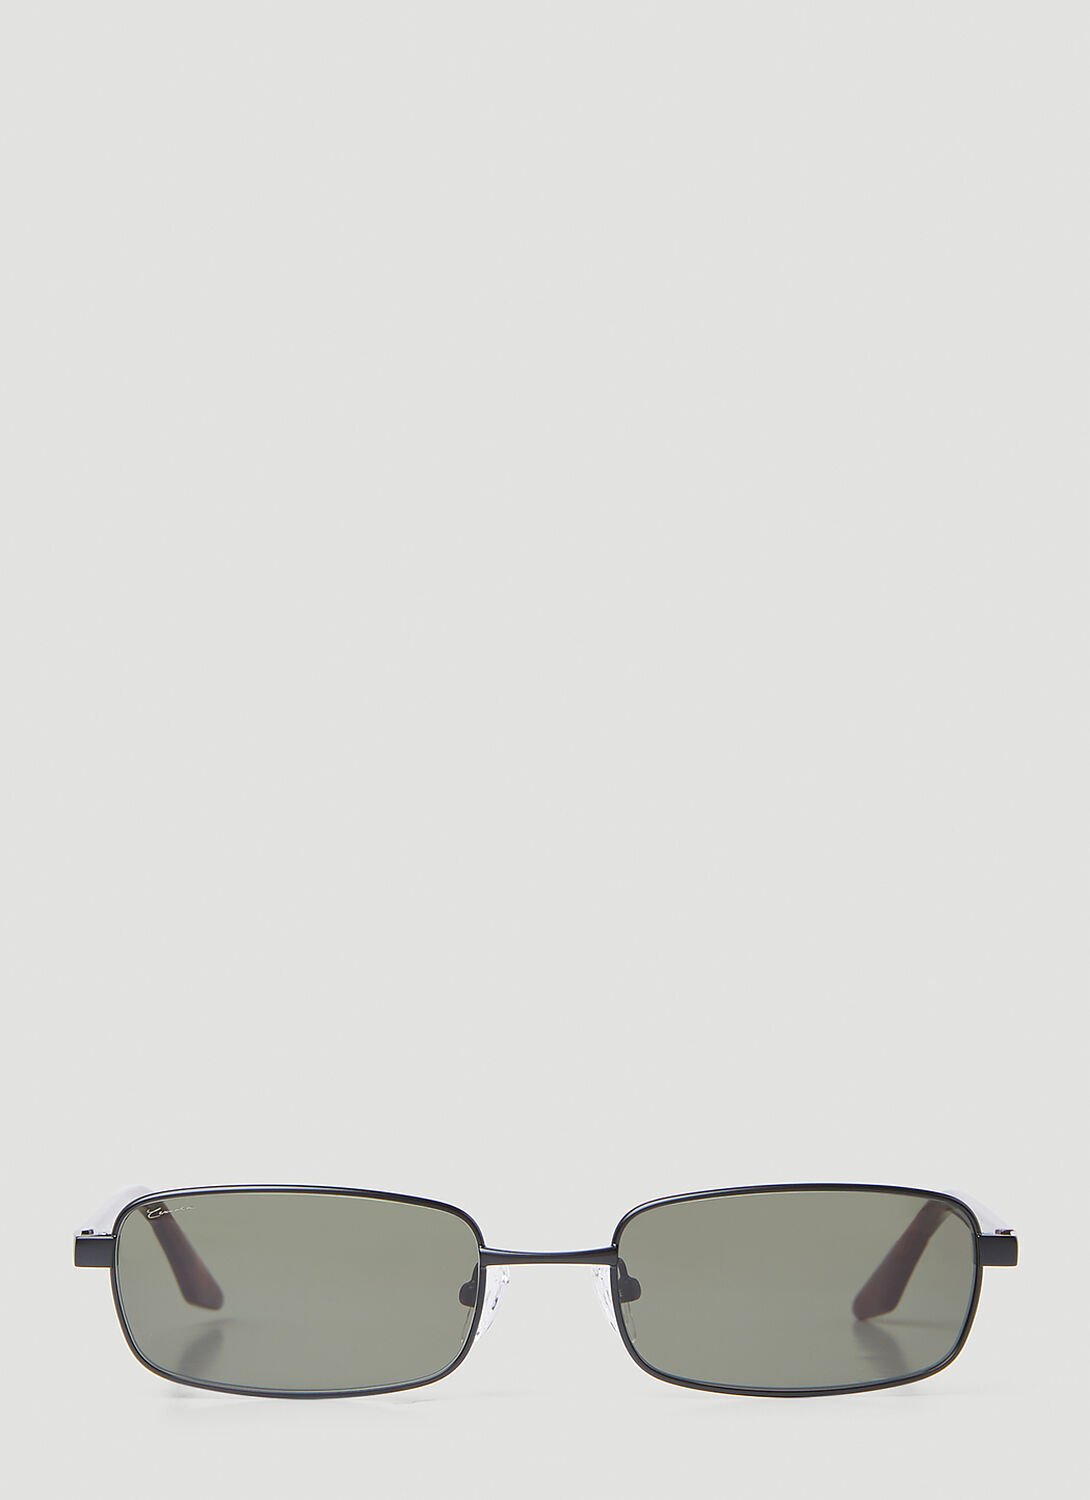 Lexxola Kenny Sunglasses In Gray